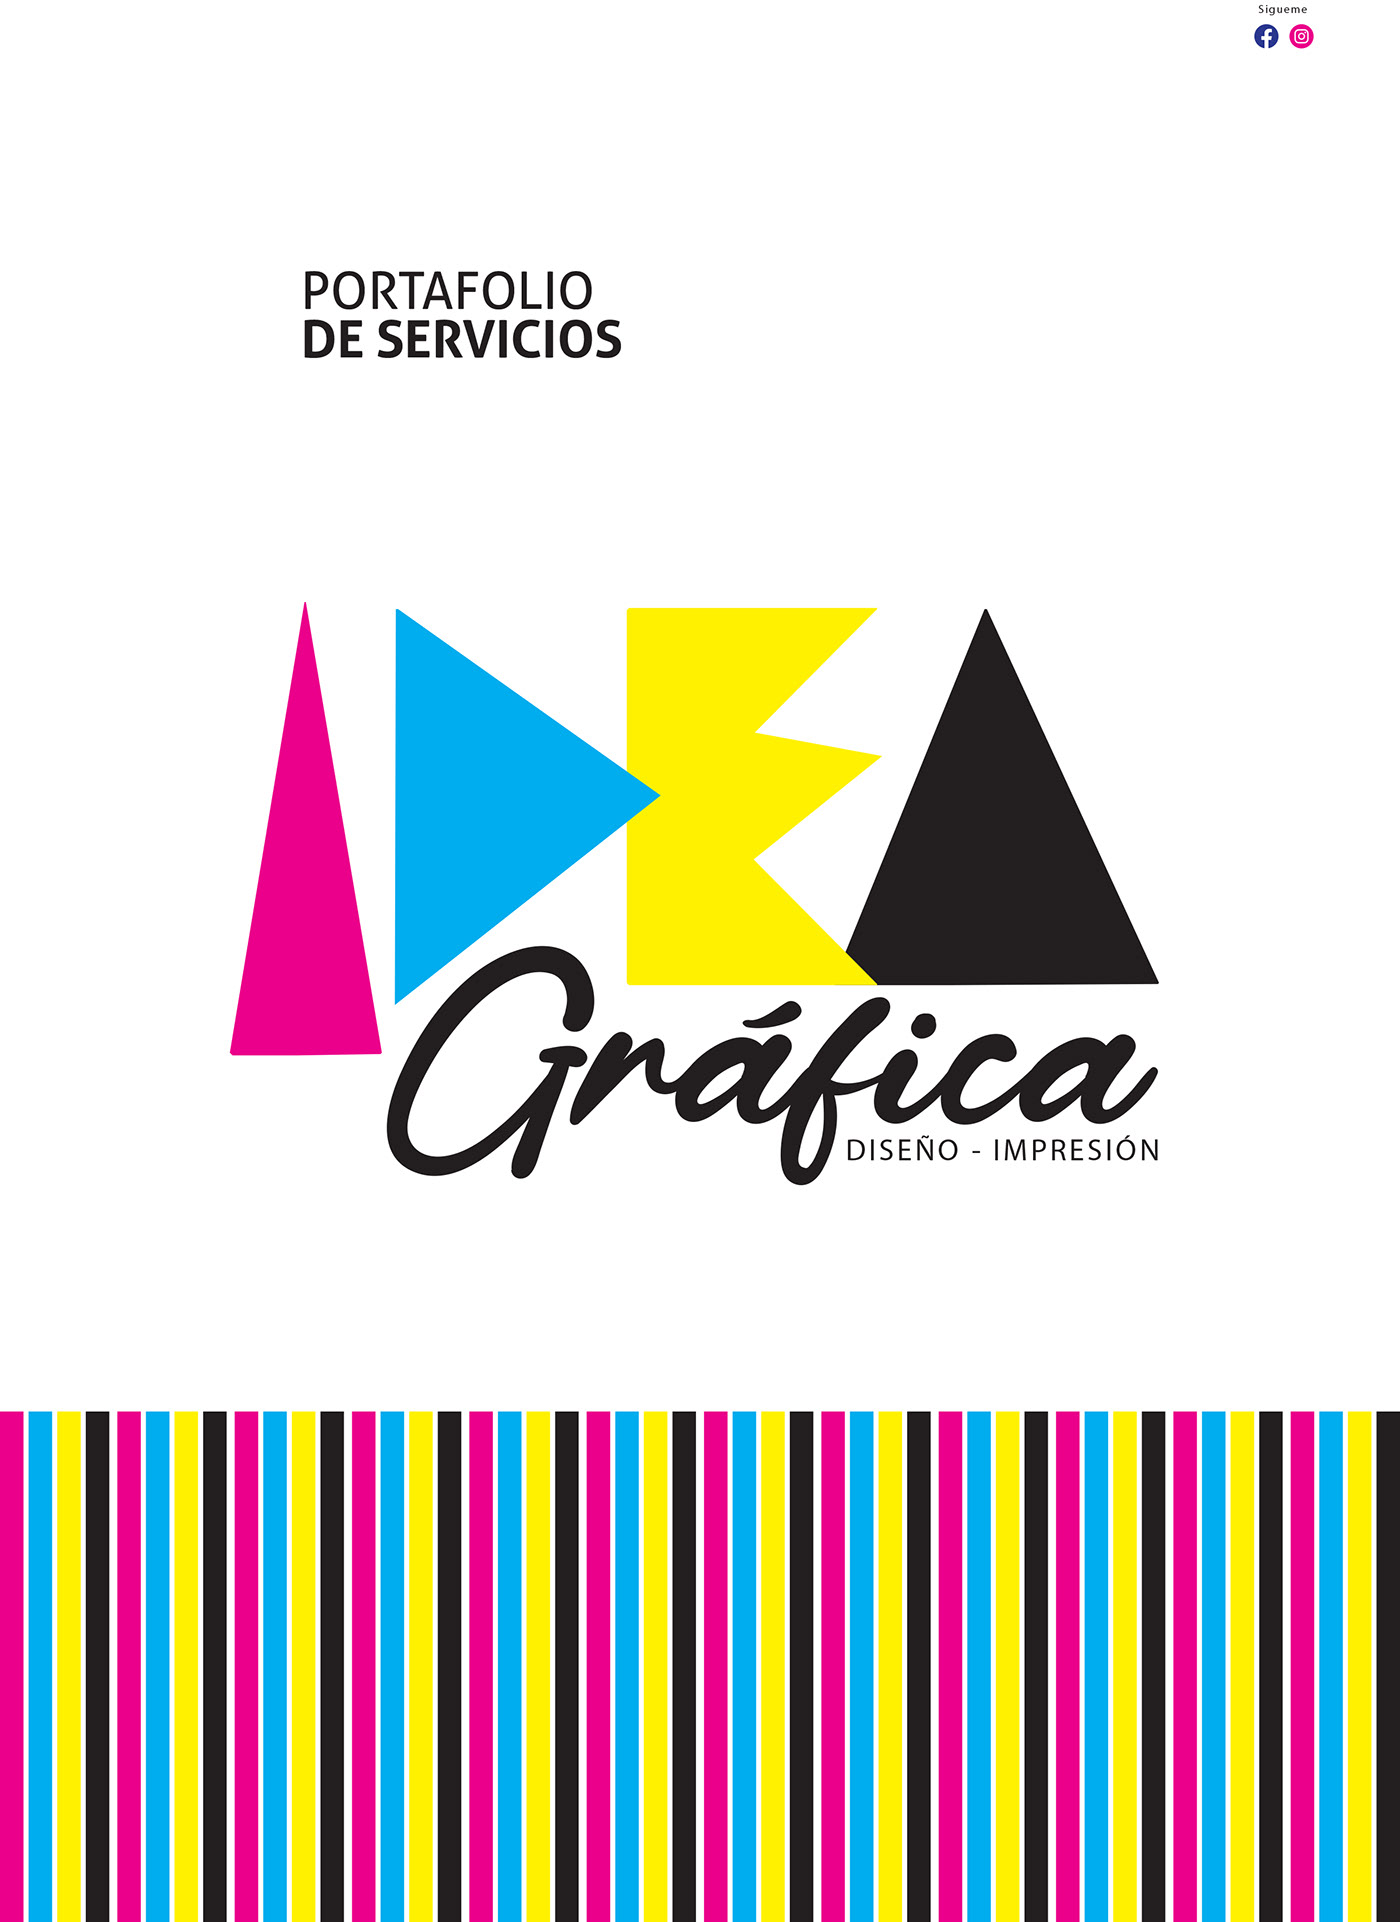 CMYK diseño gráfico Ecuador imprenta Logotipo marca